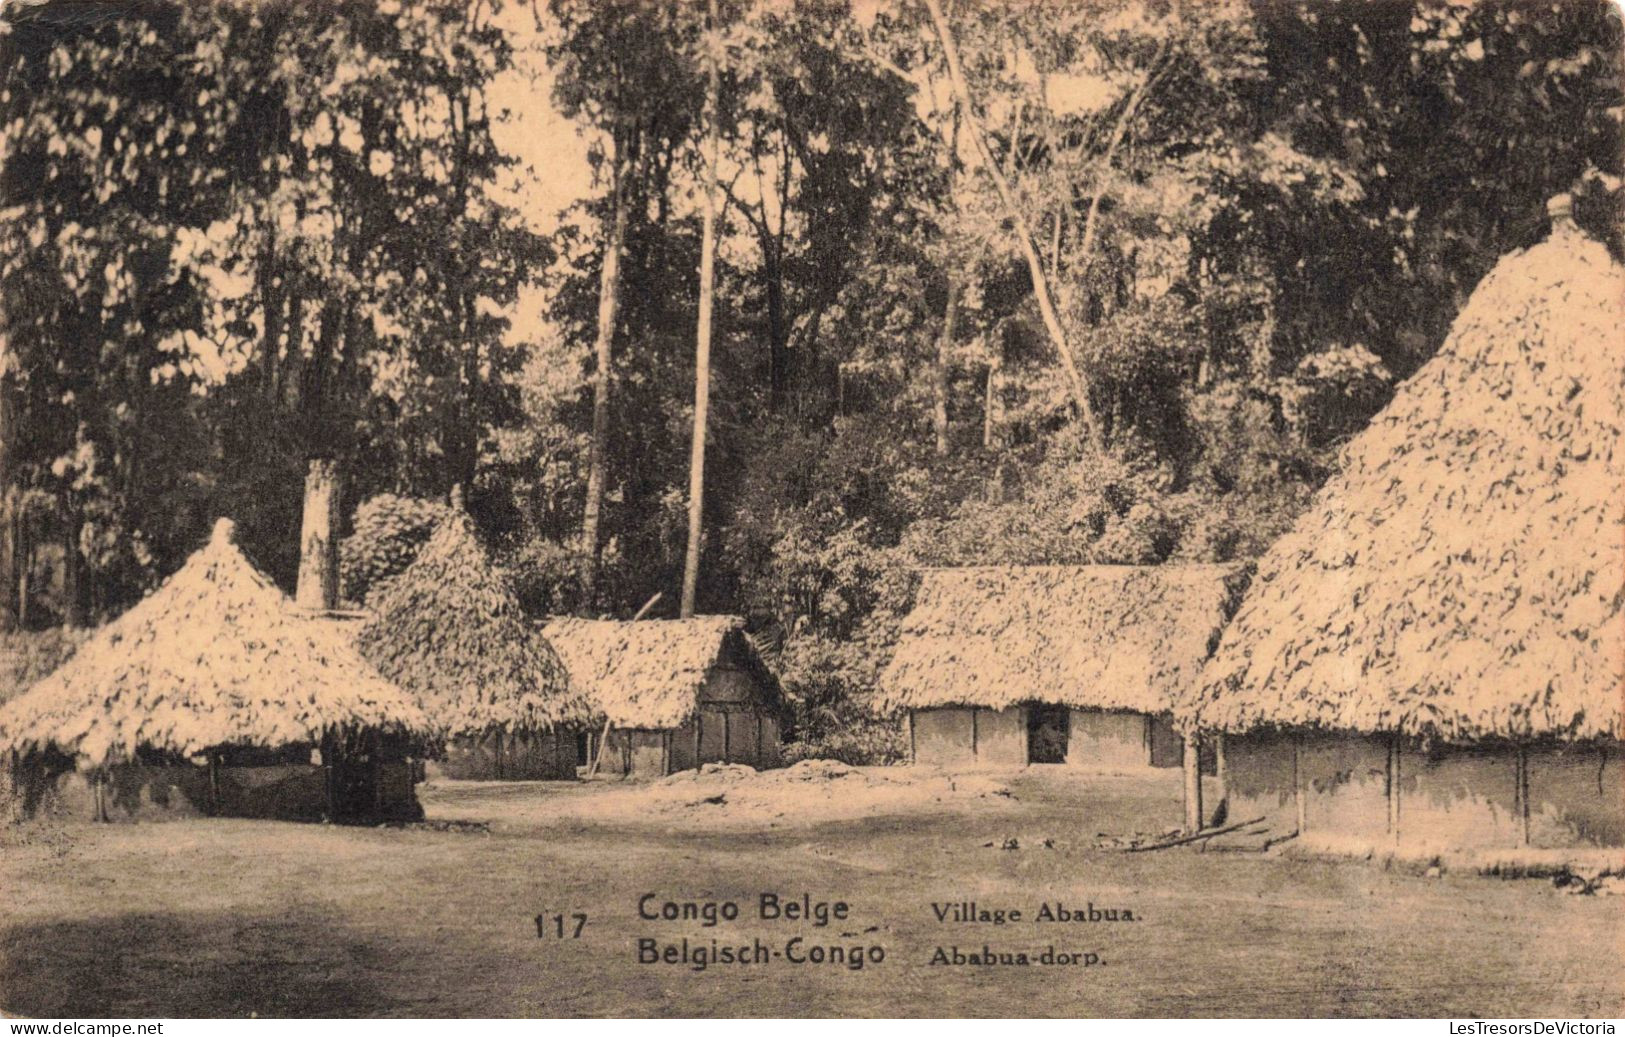 CONGO KINSHASA - Congo Belge -  Village Ababua - Carte Postale Ancienne - Belgian Congo